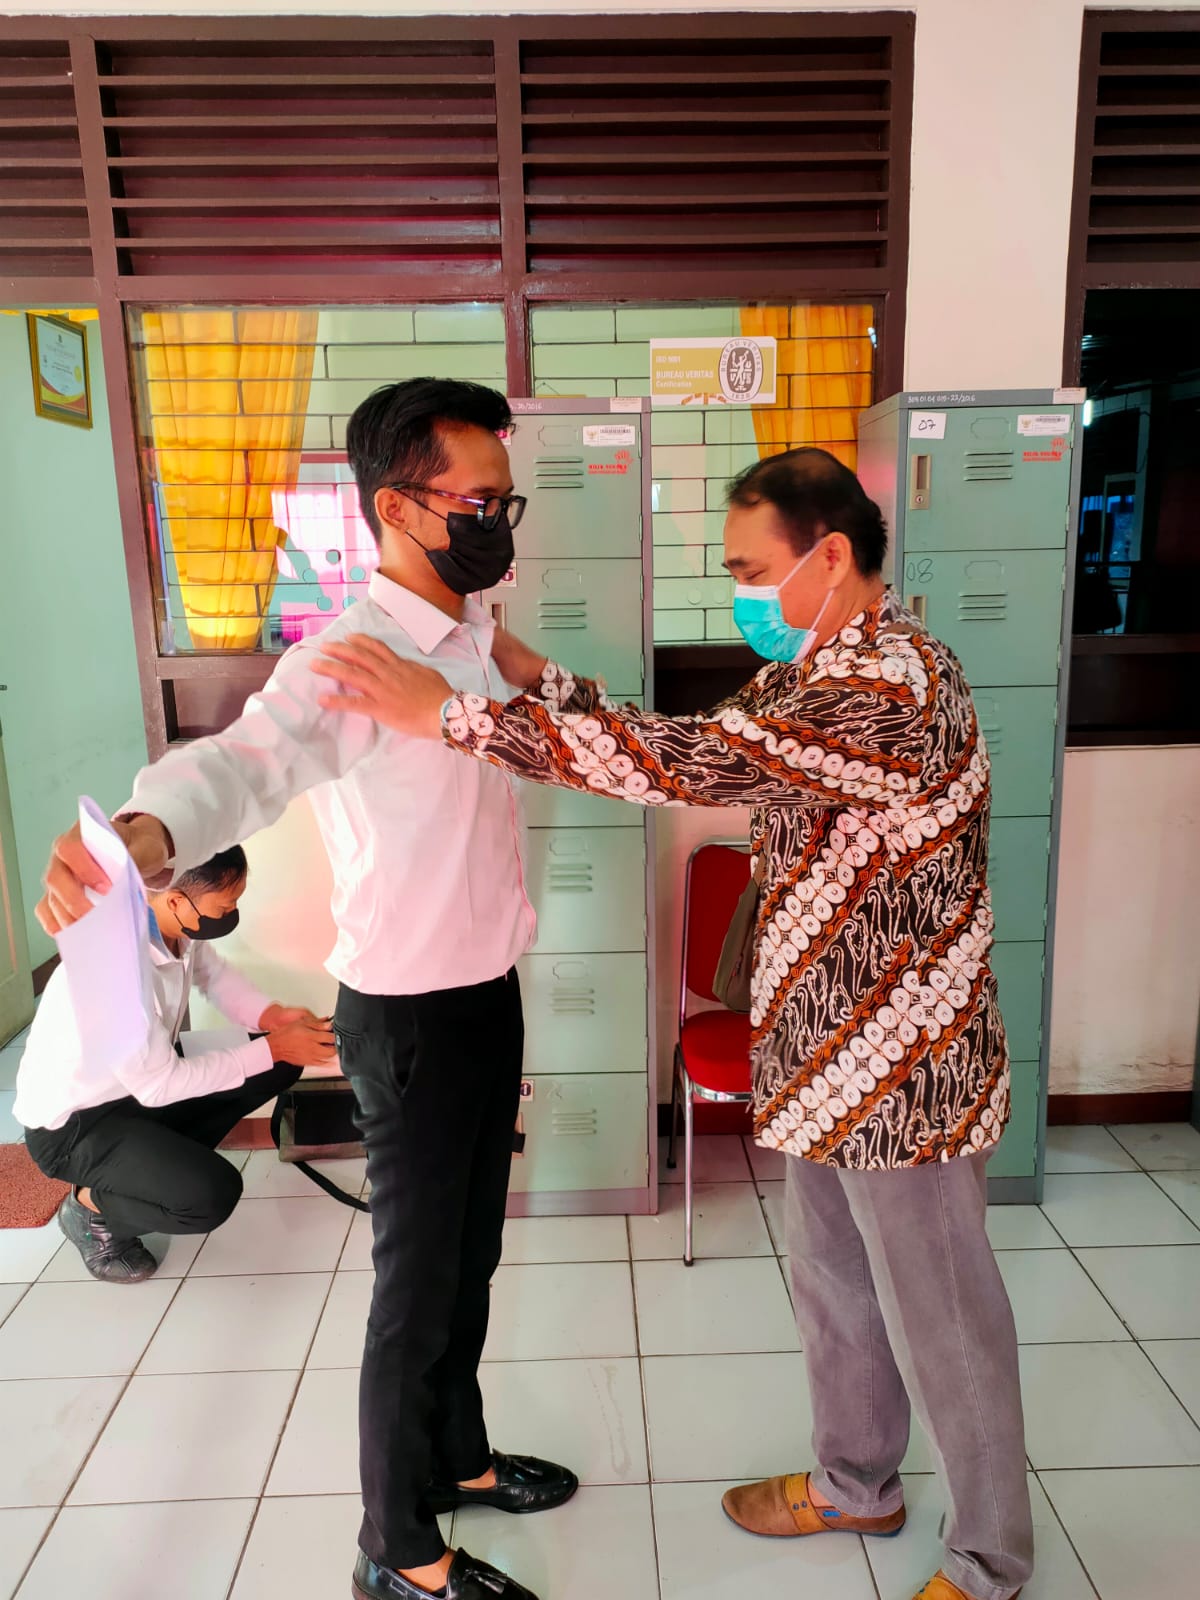 Seleksi Kompetensi PPPK Teknis Formasi Tahun 2022 Titik Lokasi UPT BKN Semarang